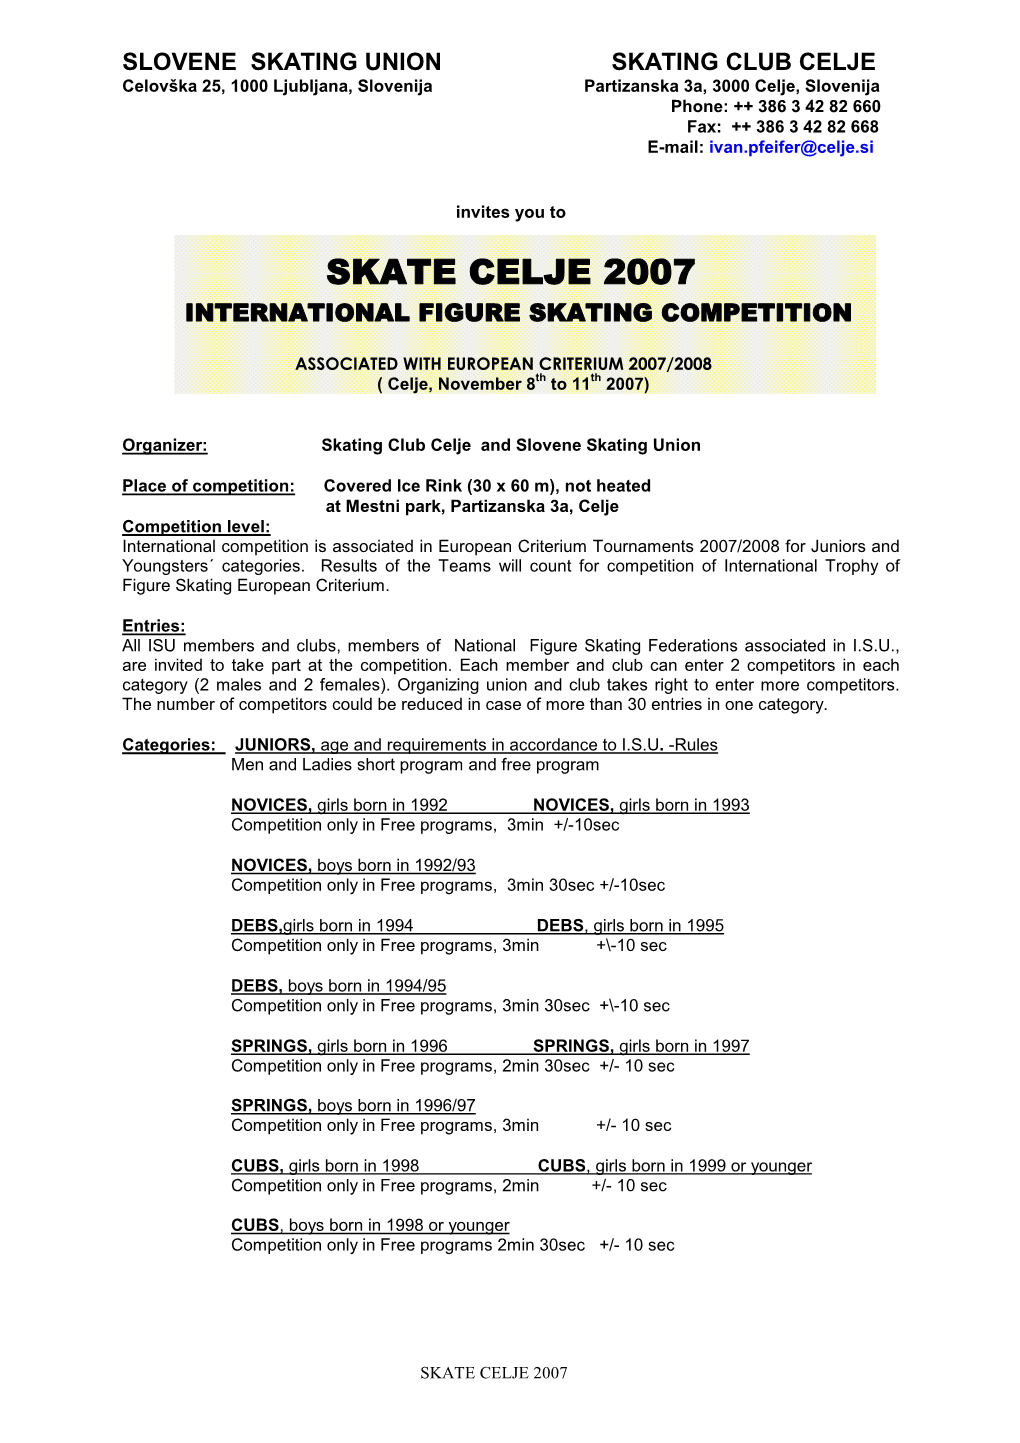 Skate Celje 2007 Internationalfigureskatingcompetition